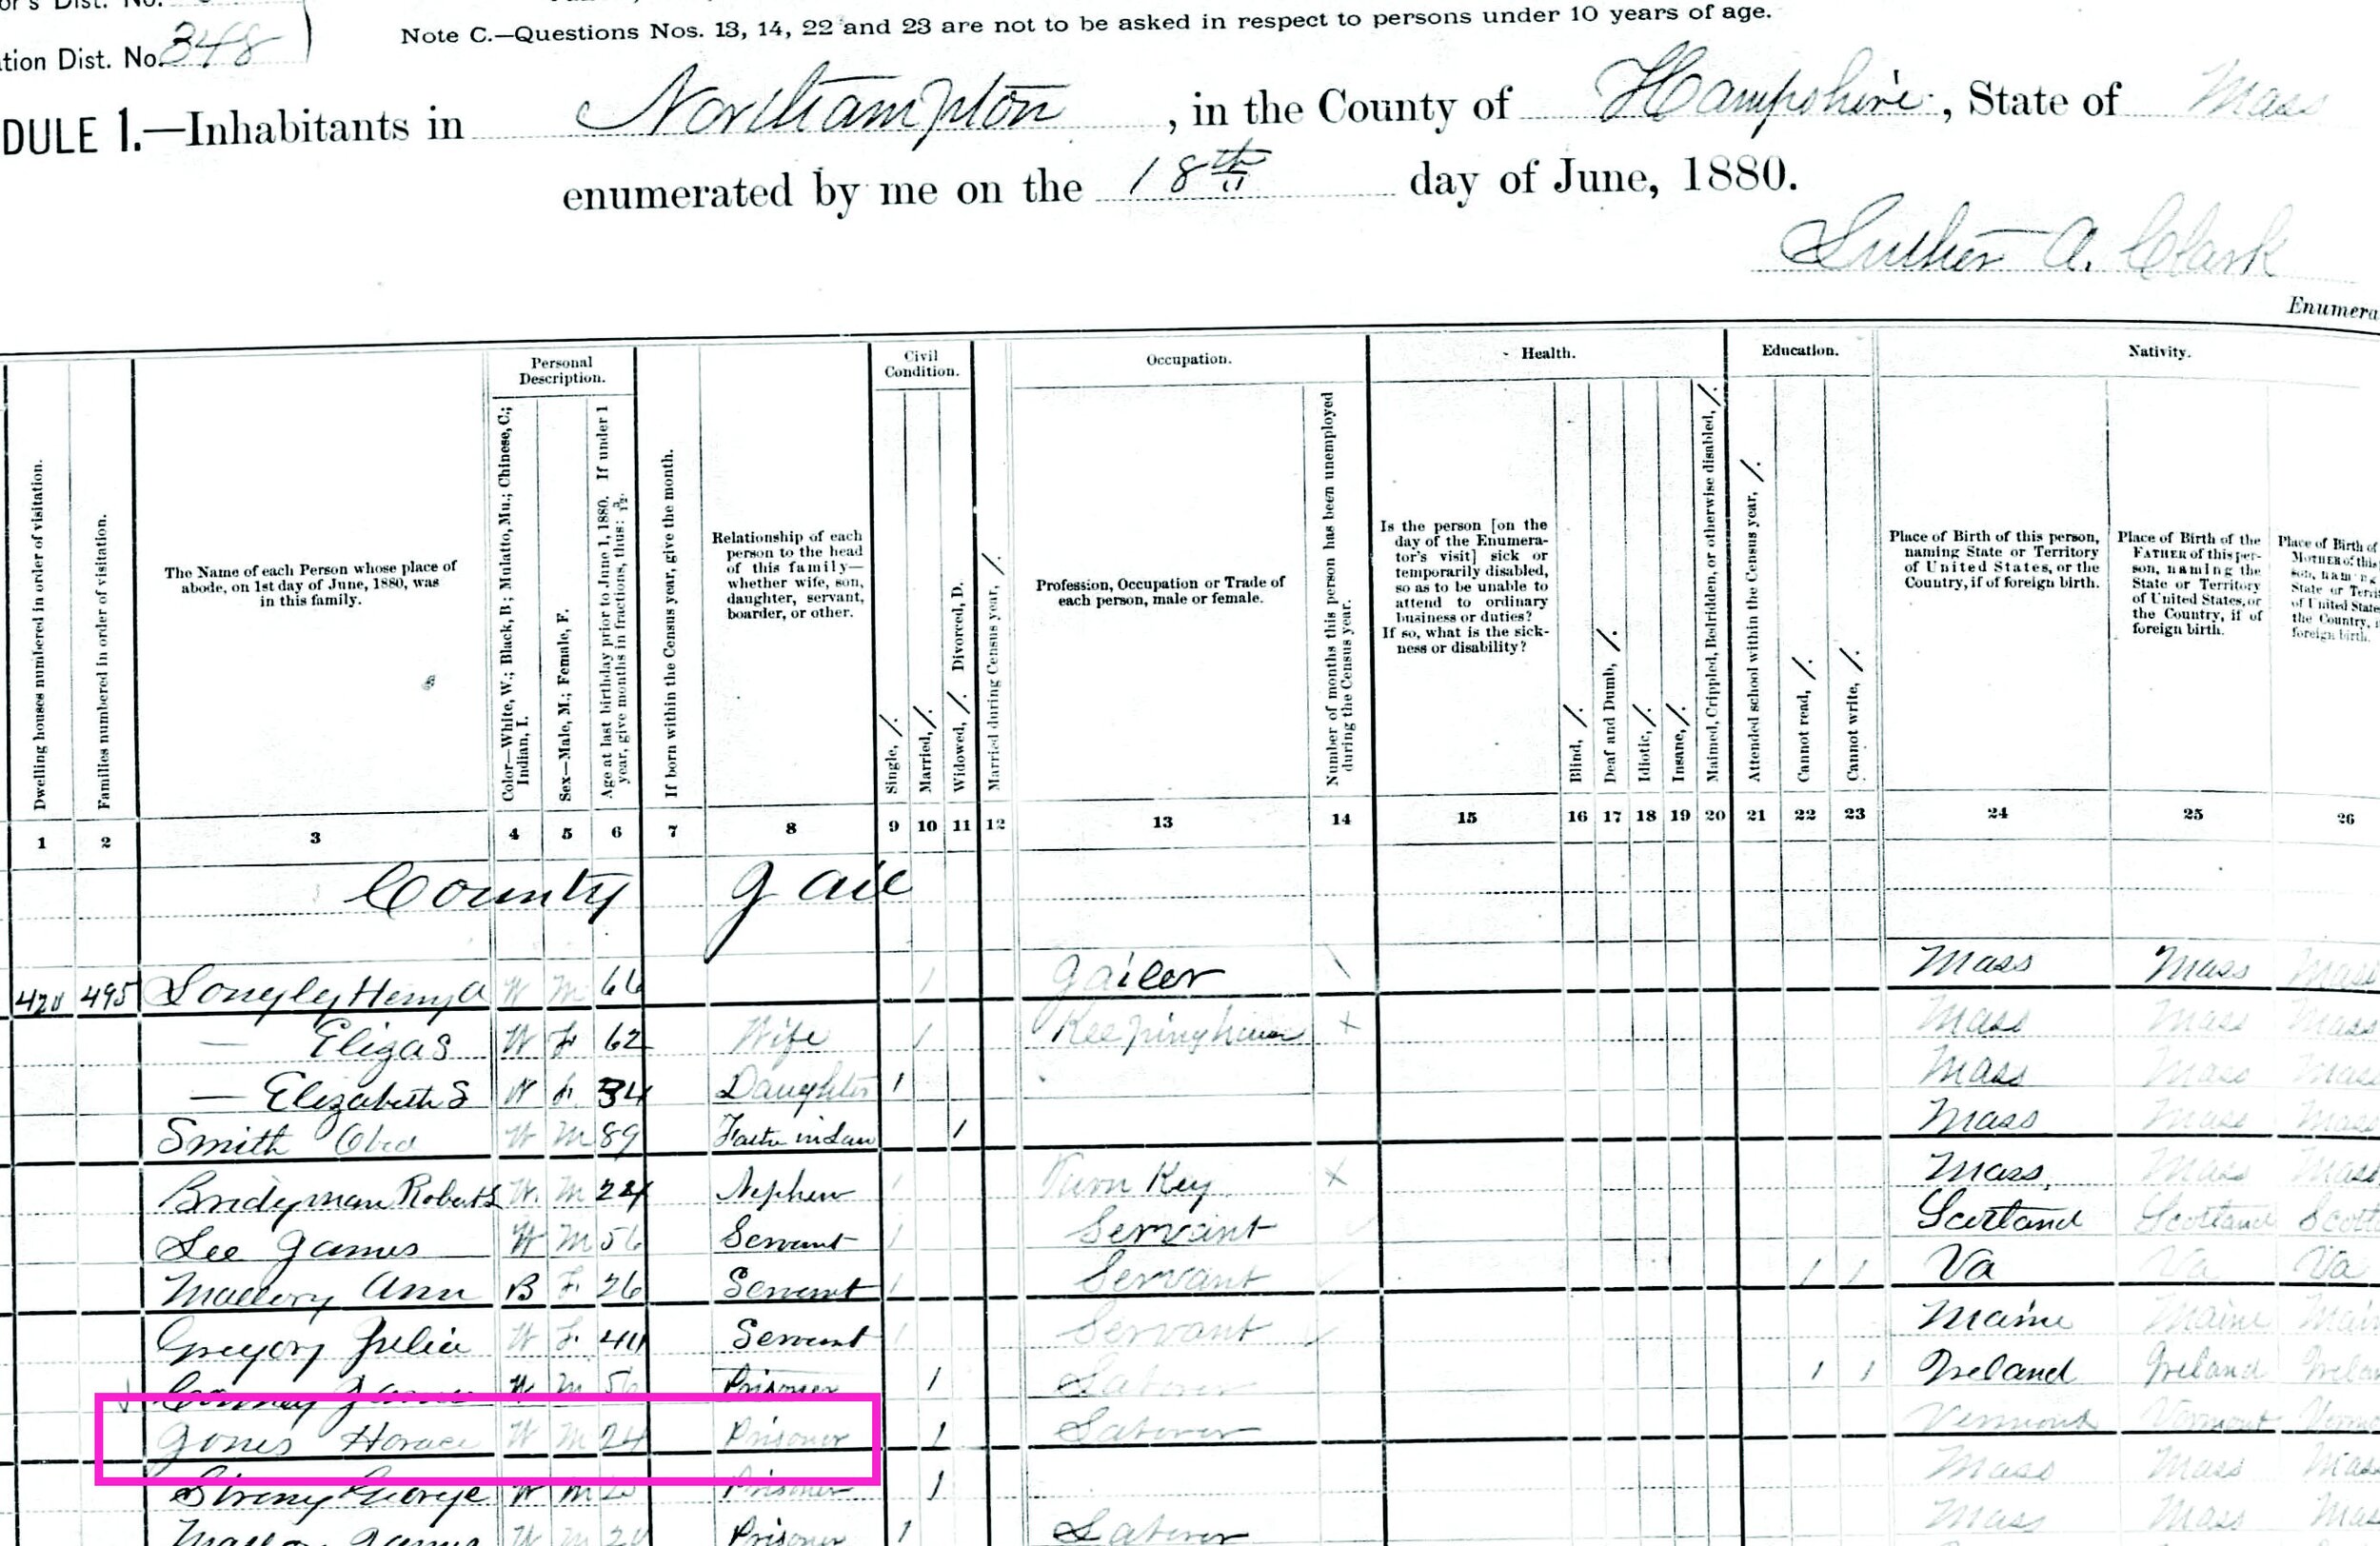 horace_jones-northampton-jail-1880-census.jpg